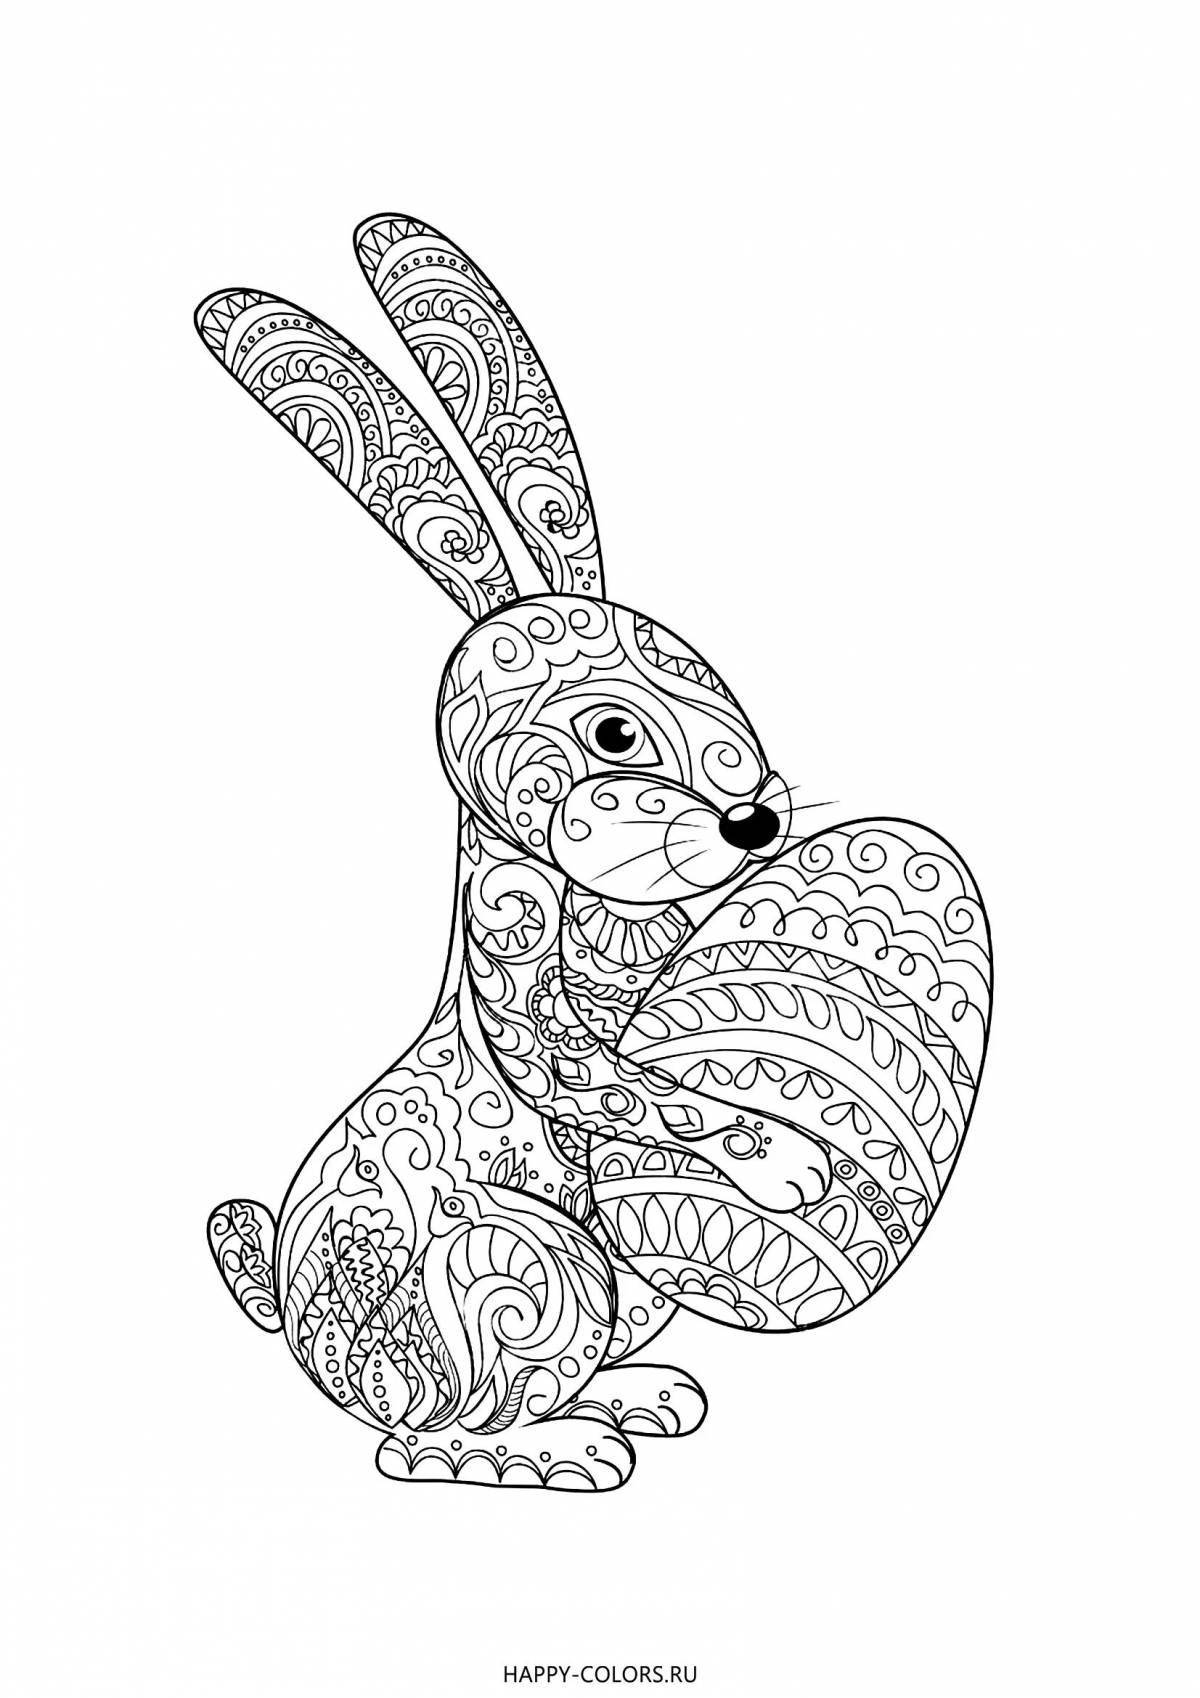 Bright coloring page bunny antistress